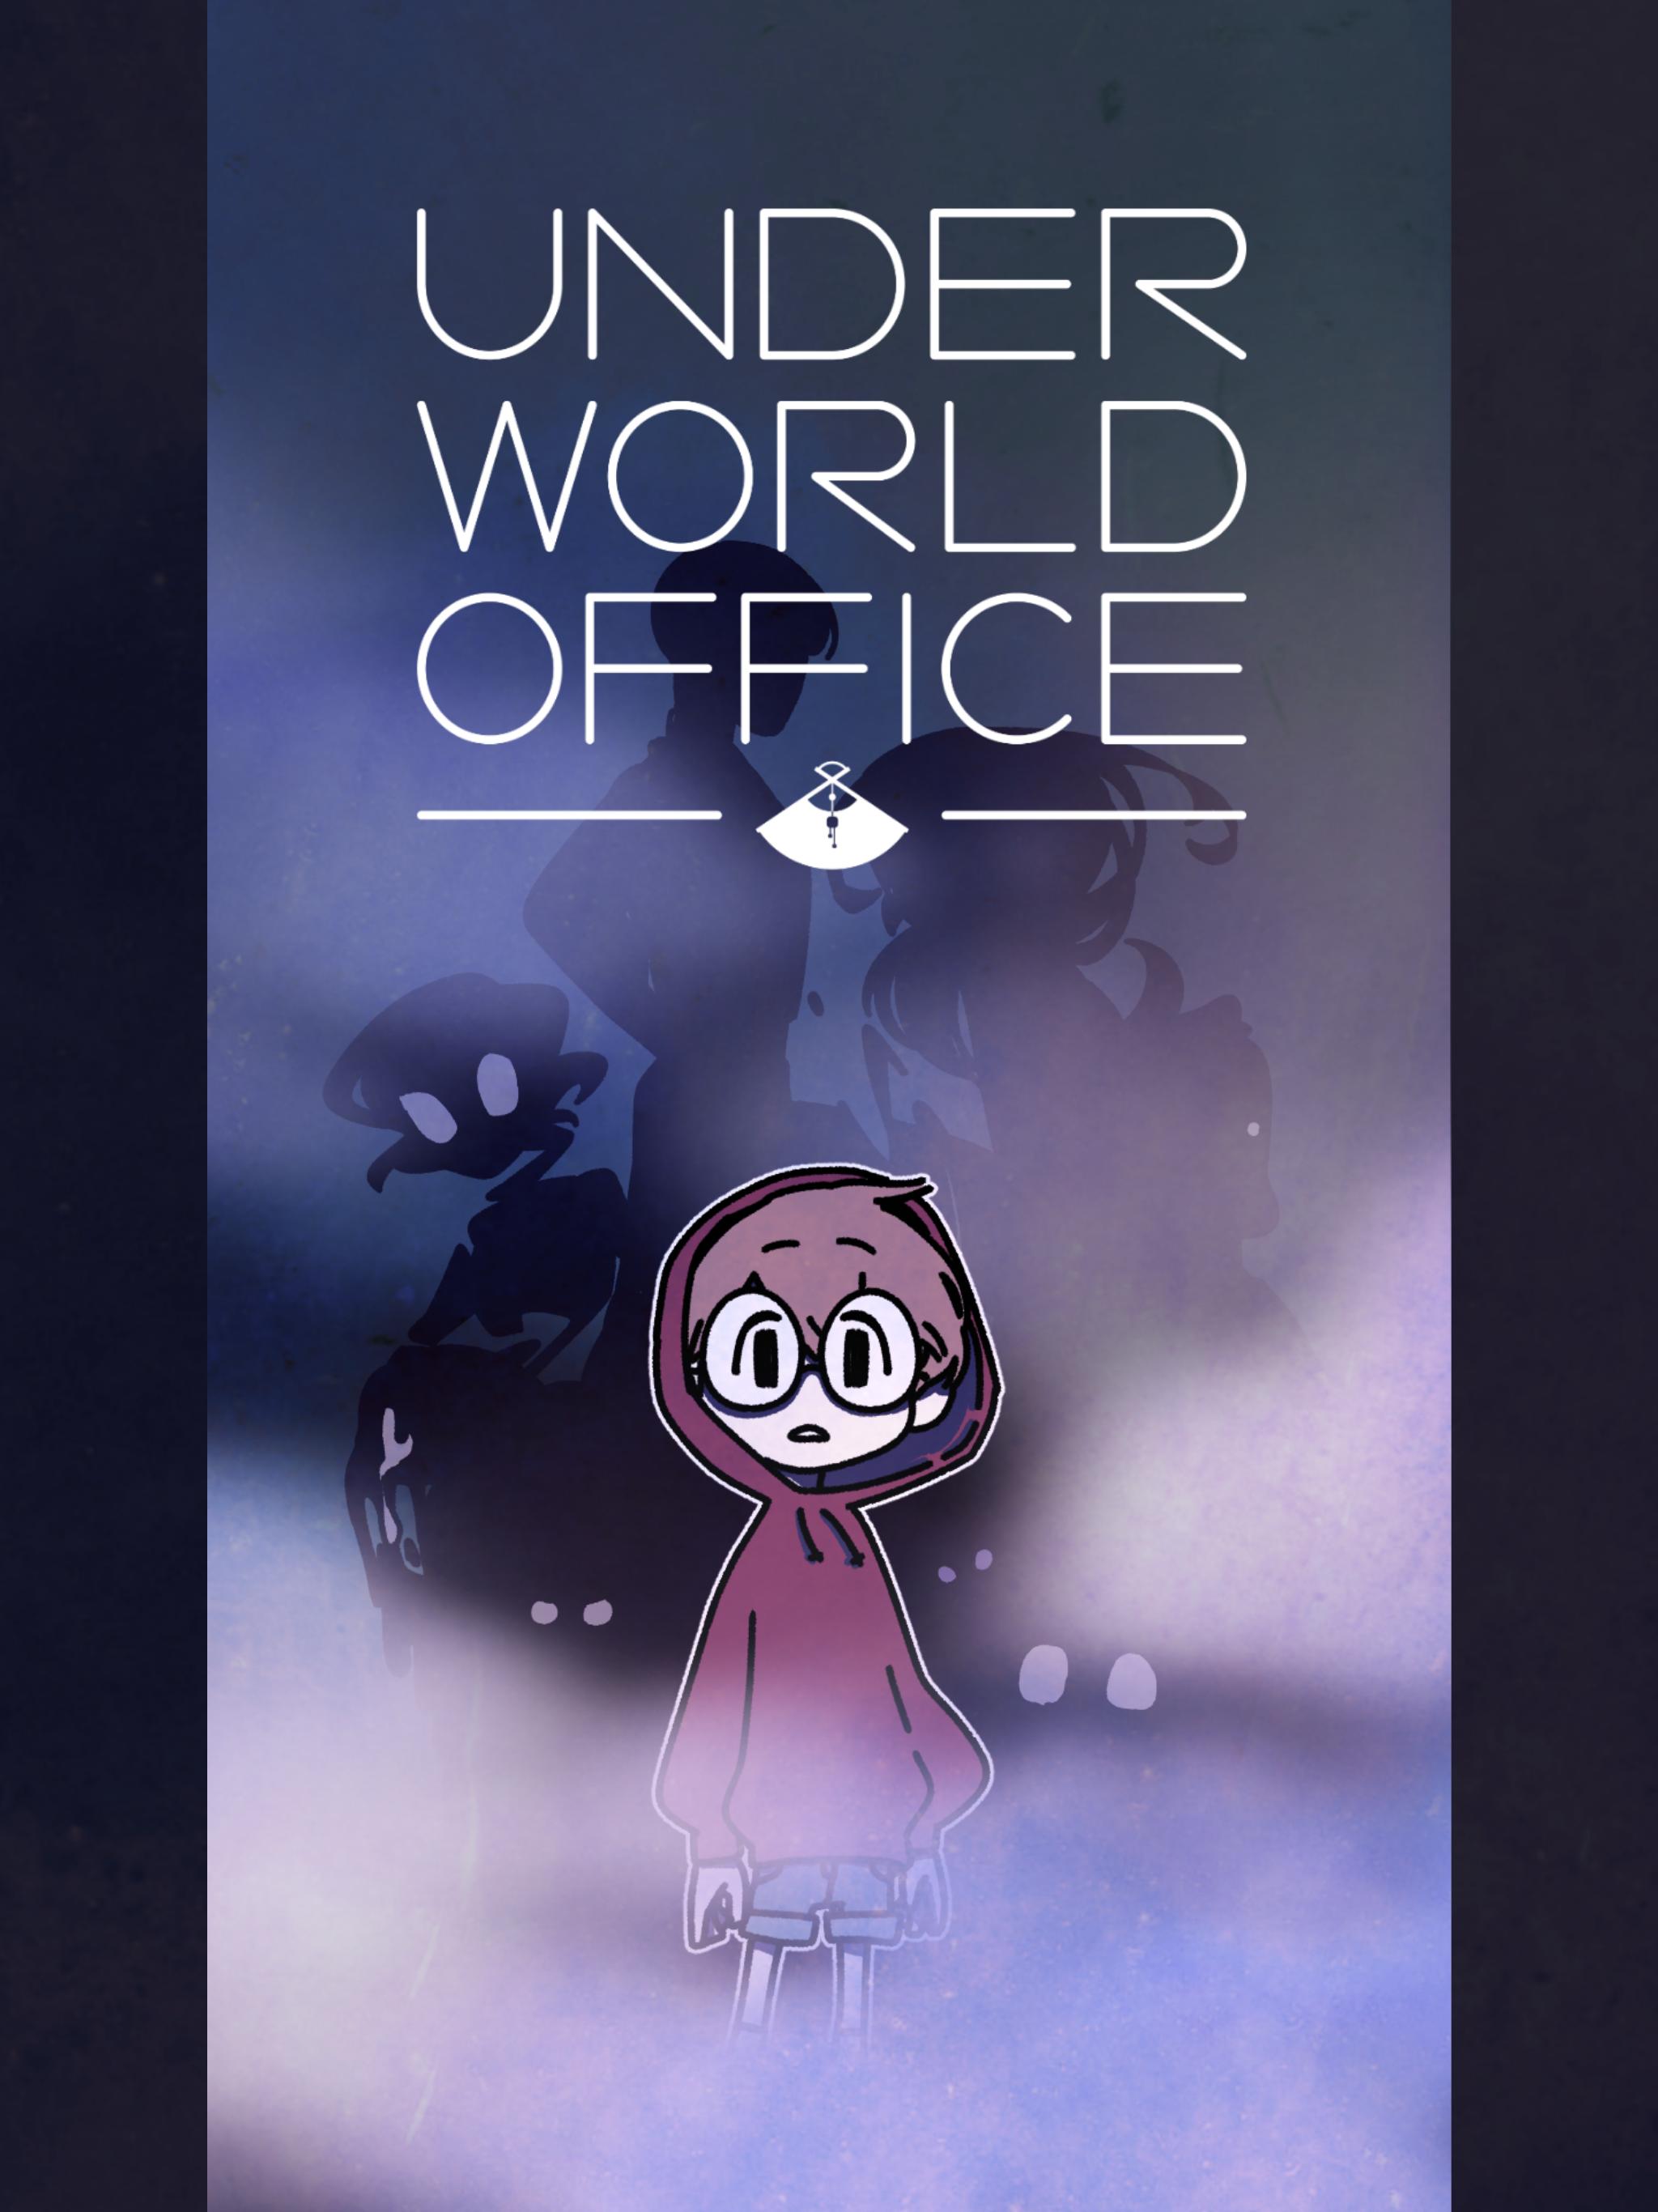 Underworld Office: Offline Mystery Visual Novel for Android